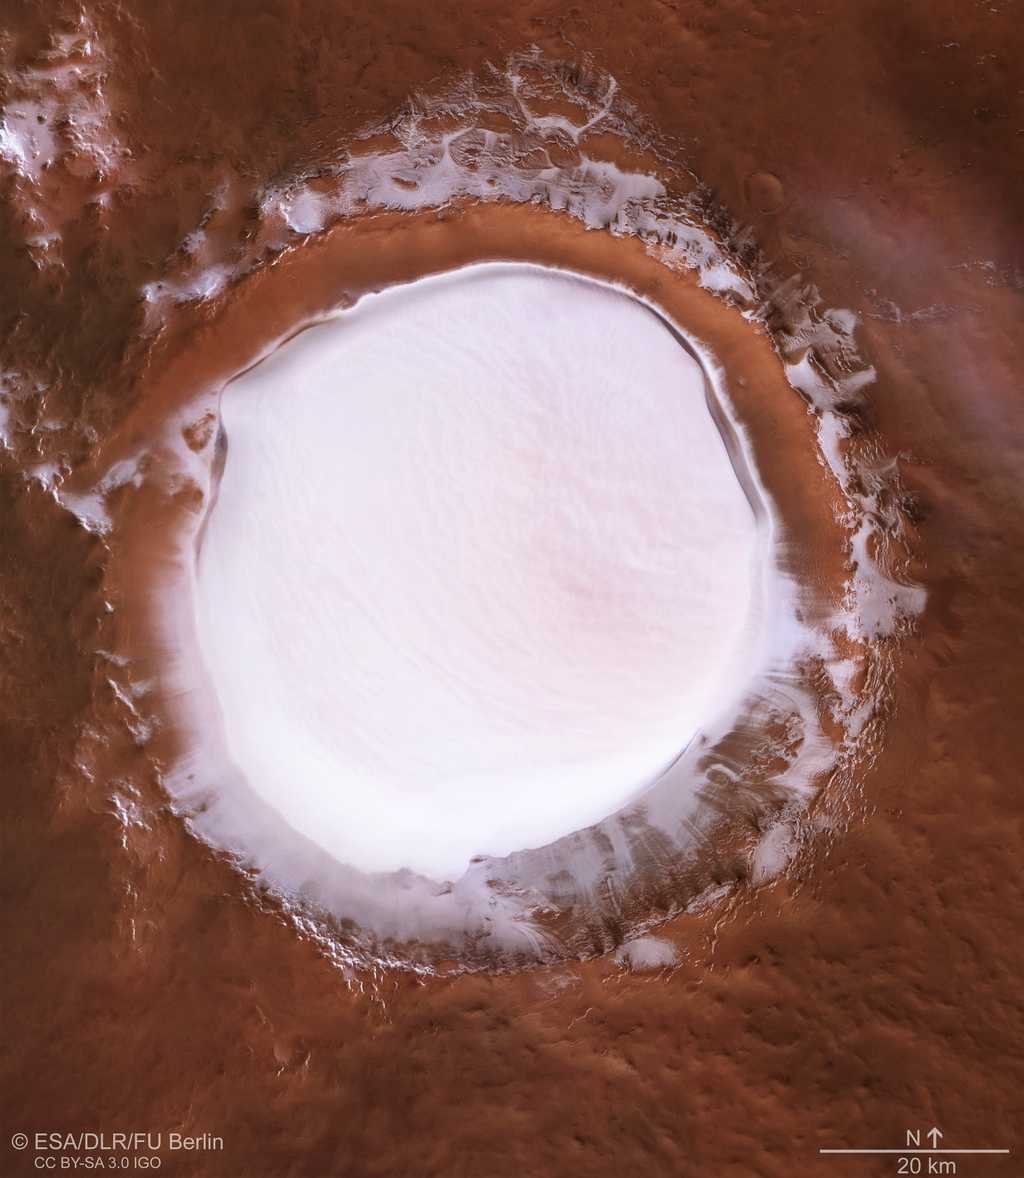 Le cratère Korolev photographié par la sonde Mars Express. © ESA, DLR, FU Berlin, CC by-sa 3.0 IGO